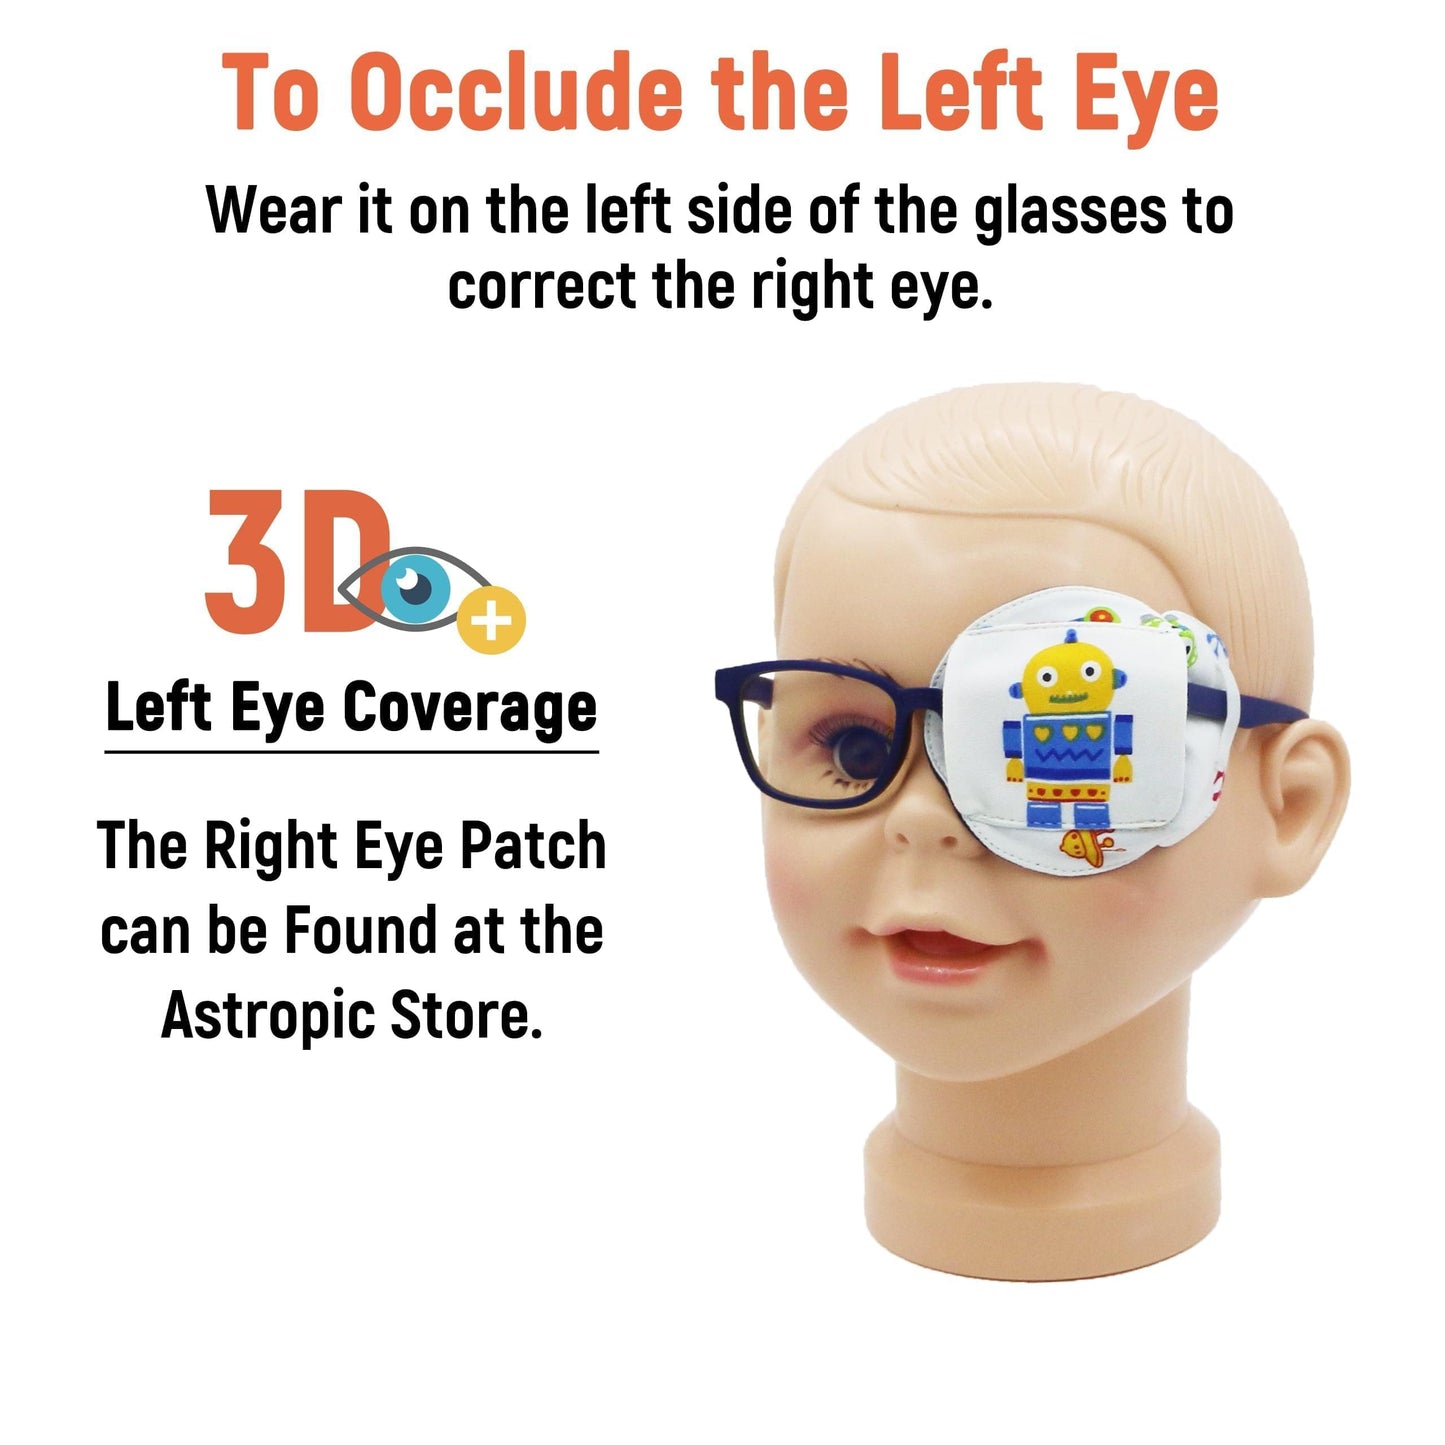 3D Cotton & Silk Eye Patch for Kids Boys Glasses (Yellow Robot, Left Eye)